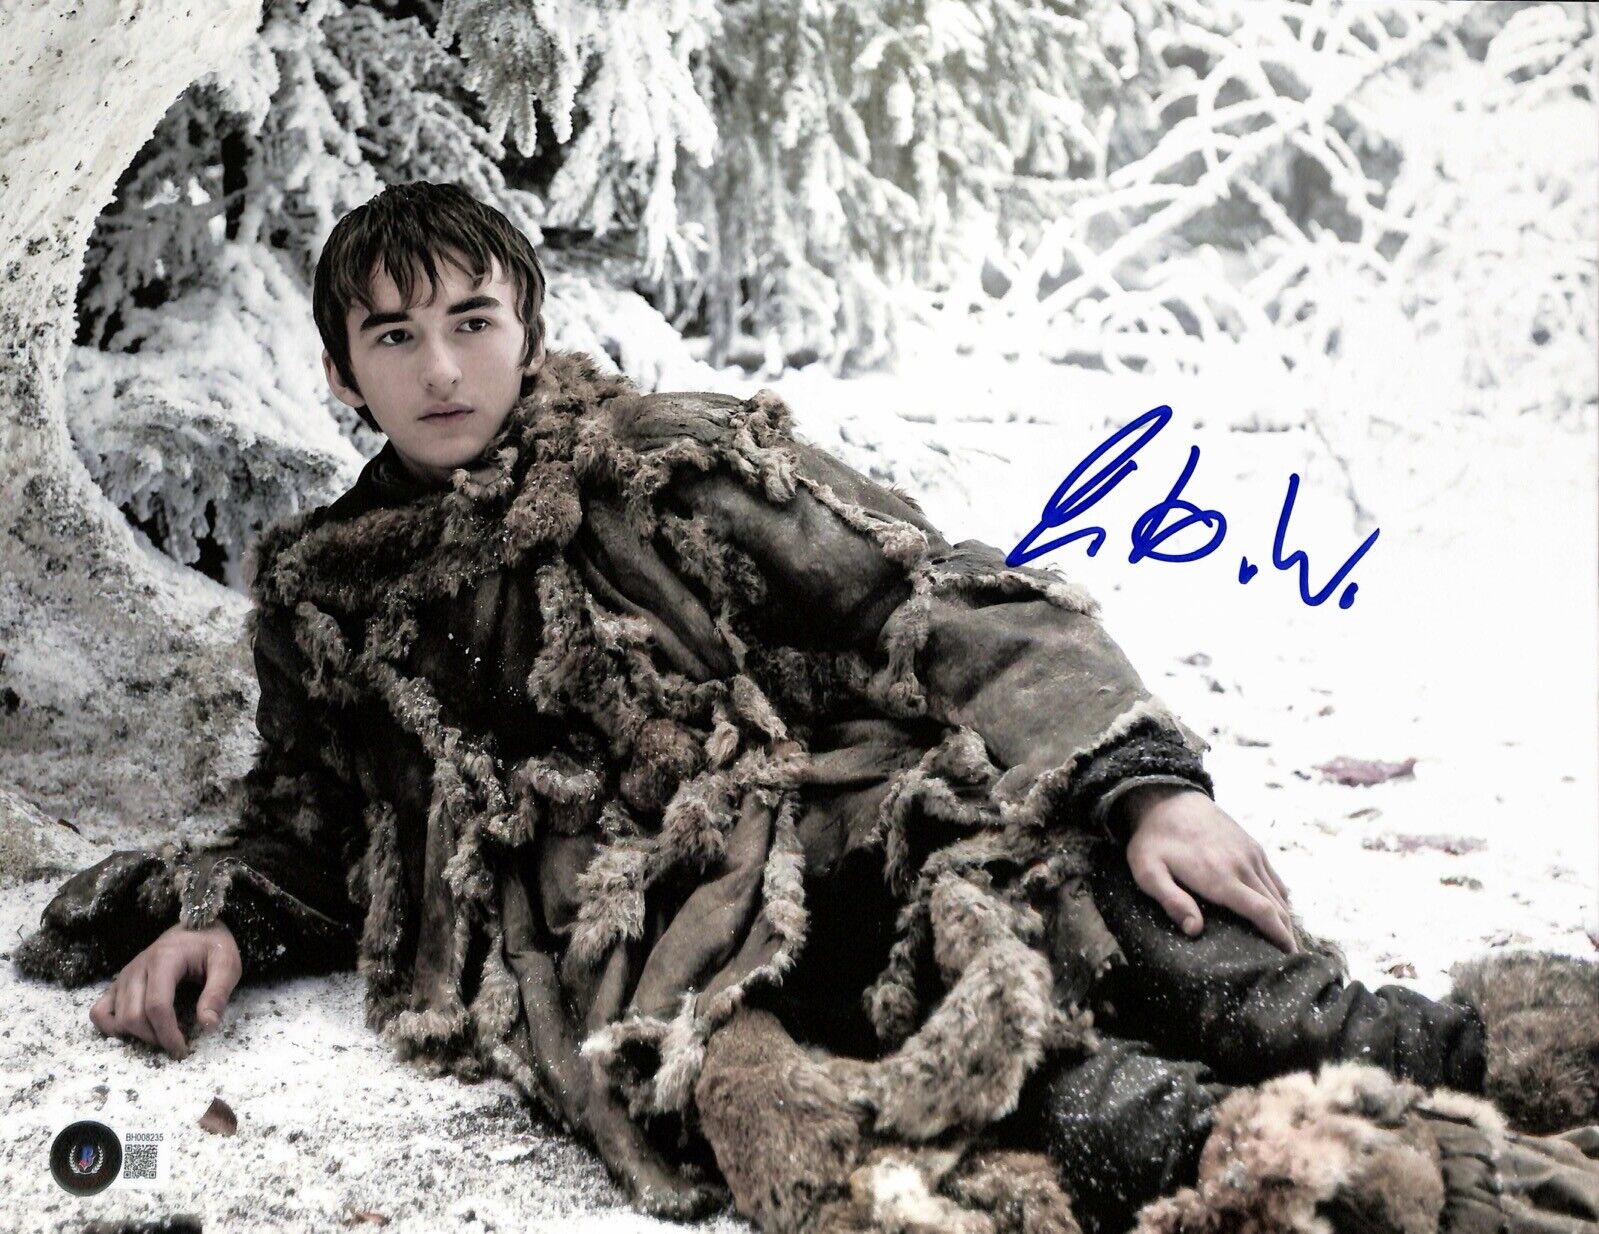 Isaac Hempstead Wright “Bran Stark” Game of Thrones Signed 11x14 Photo BECKETT